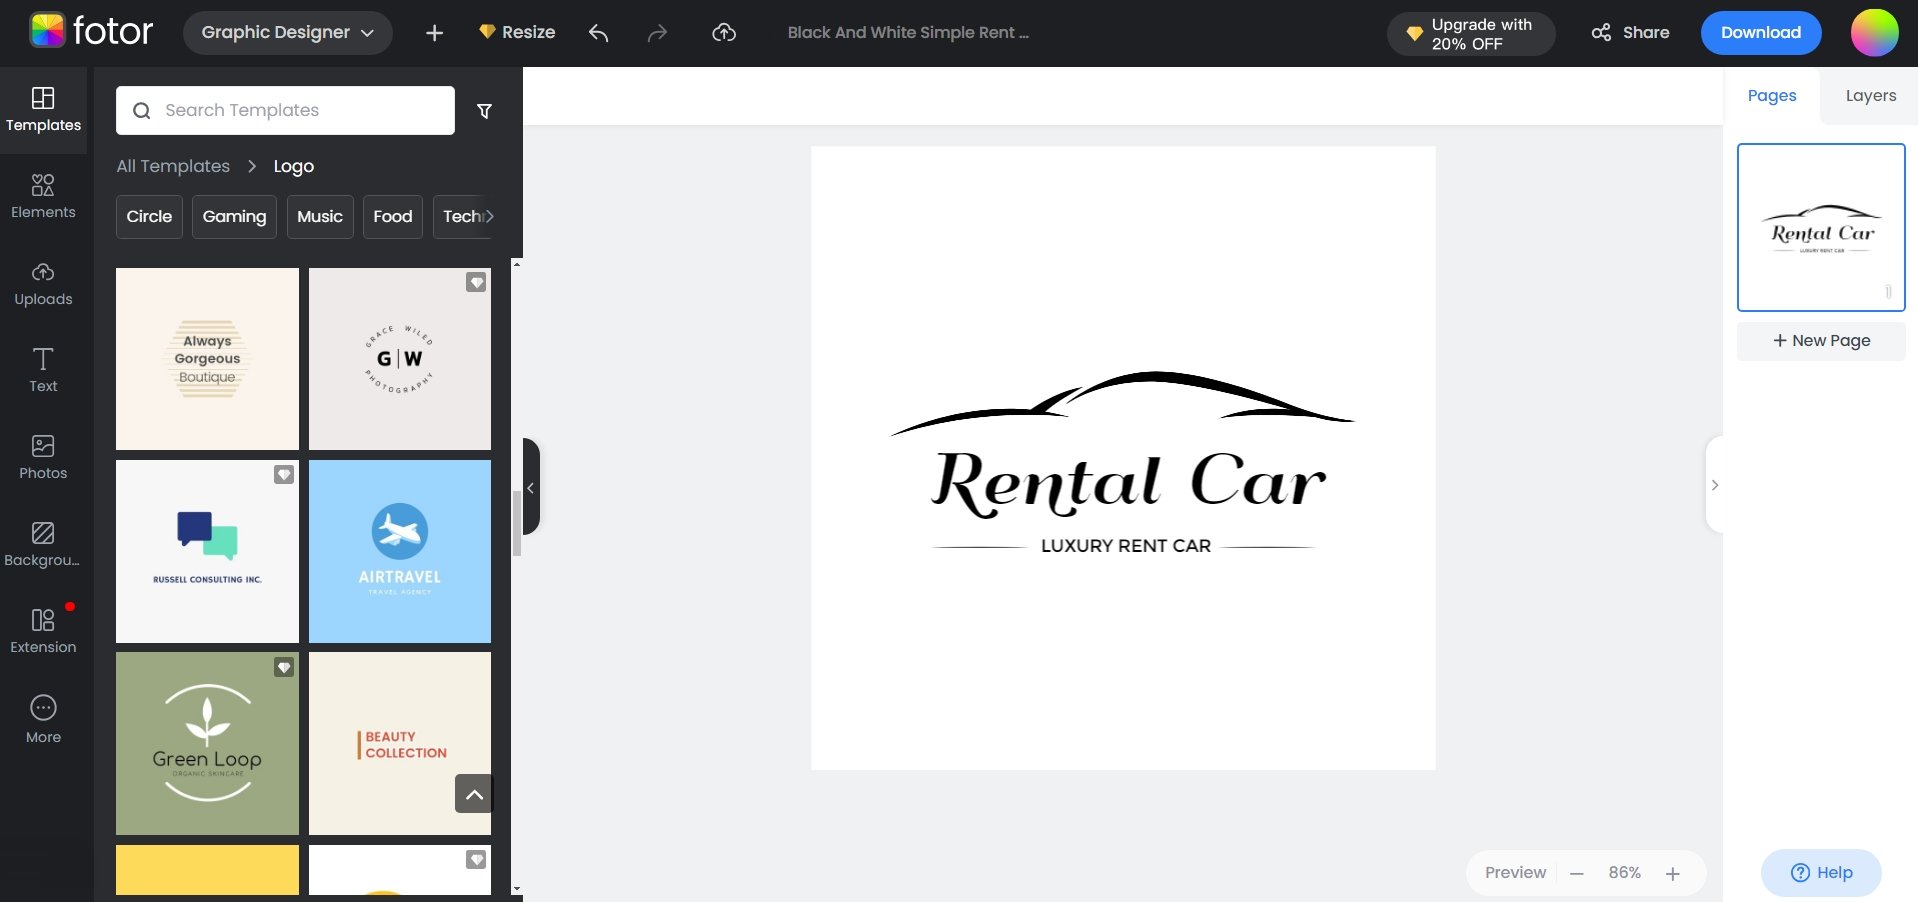 make a rental car logo in fotor